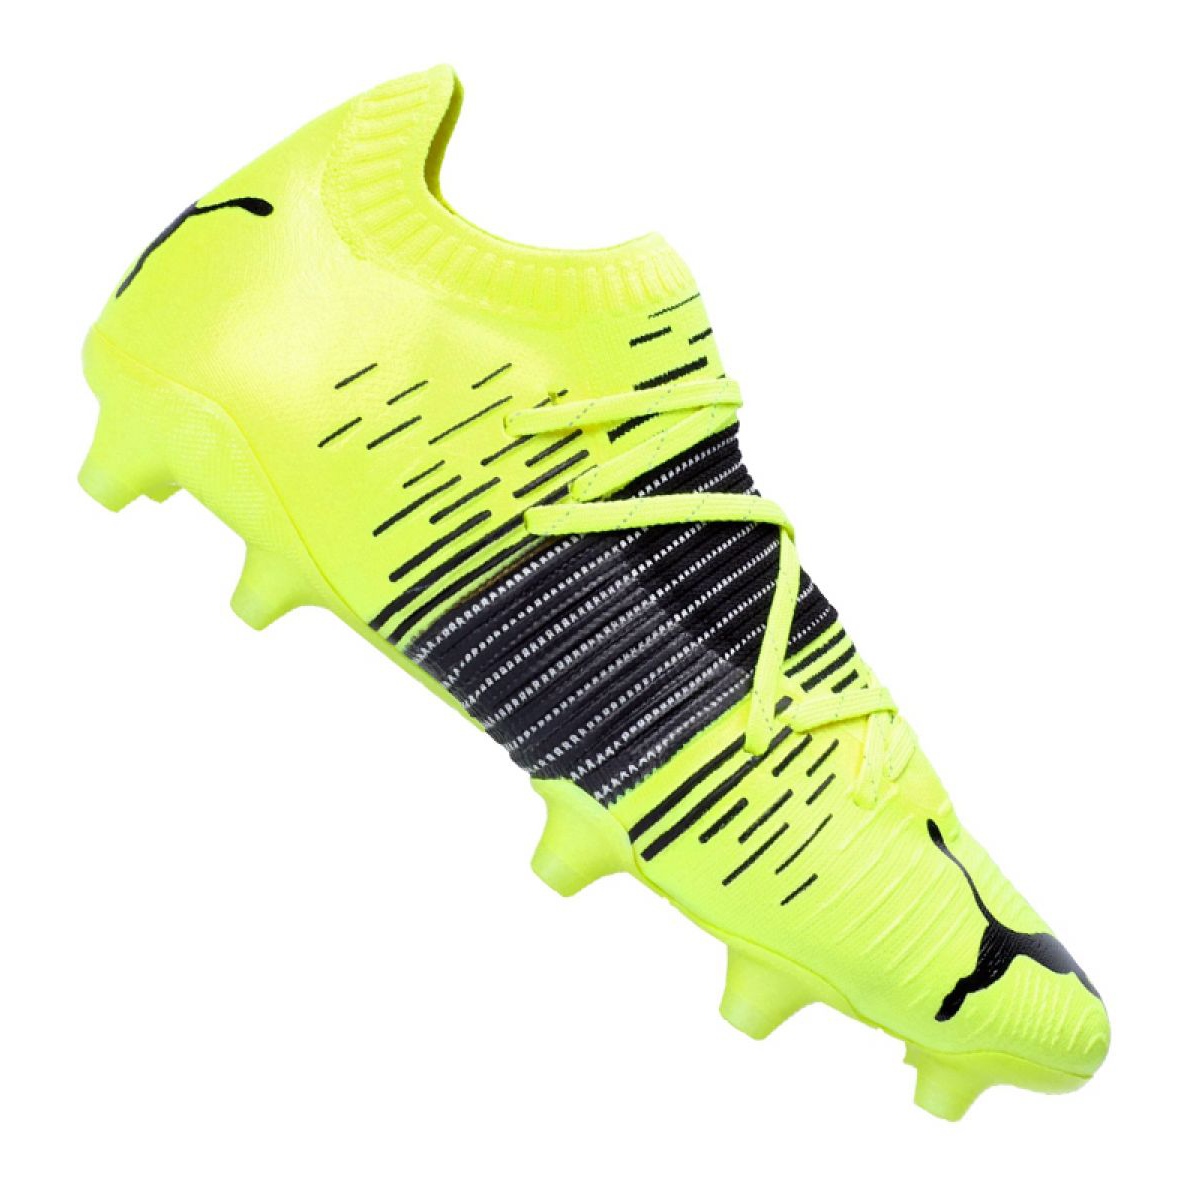 Football Boots Puma Future Z 1 1 Fg Ag M 01 Multicolored Yellow Black Gray Silver Keeshoes